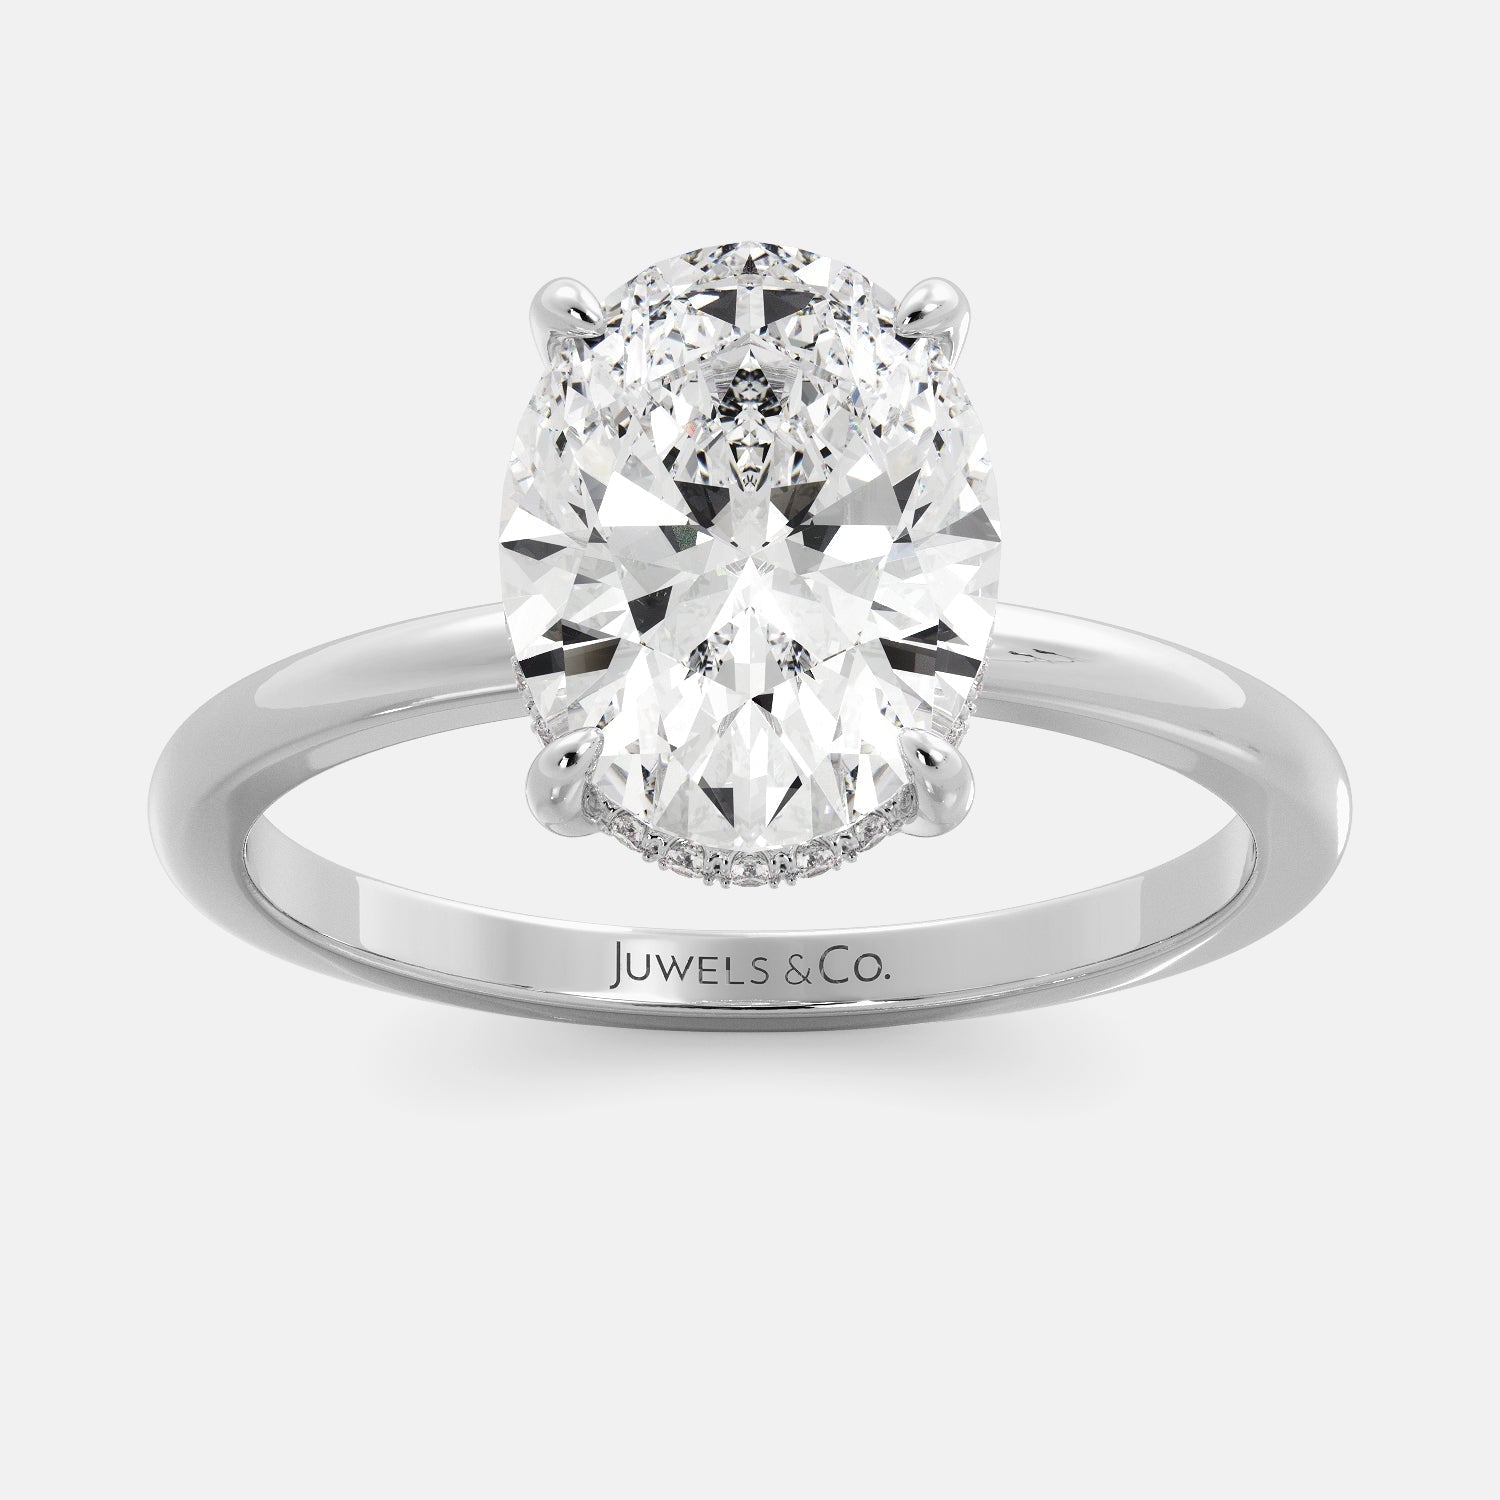 Lab-grown Oval Cut Diamond Ring, 2 carat, white gold 14K